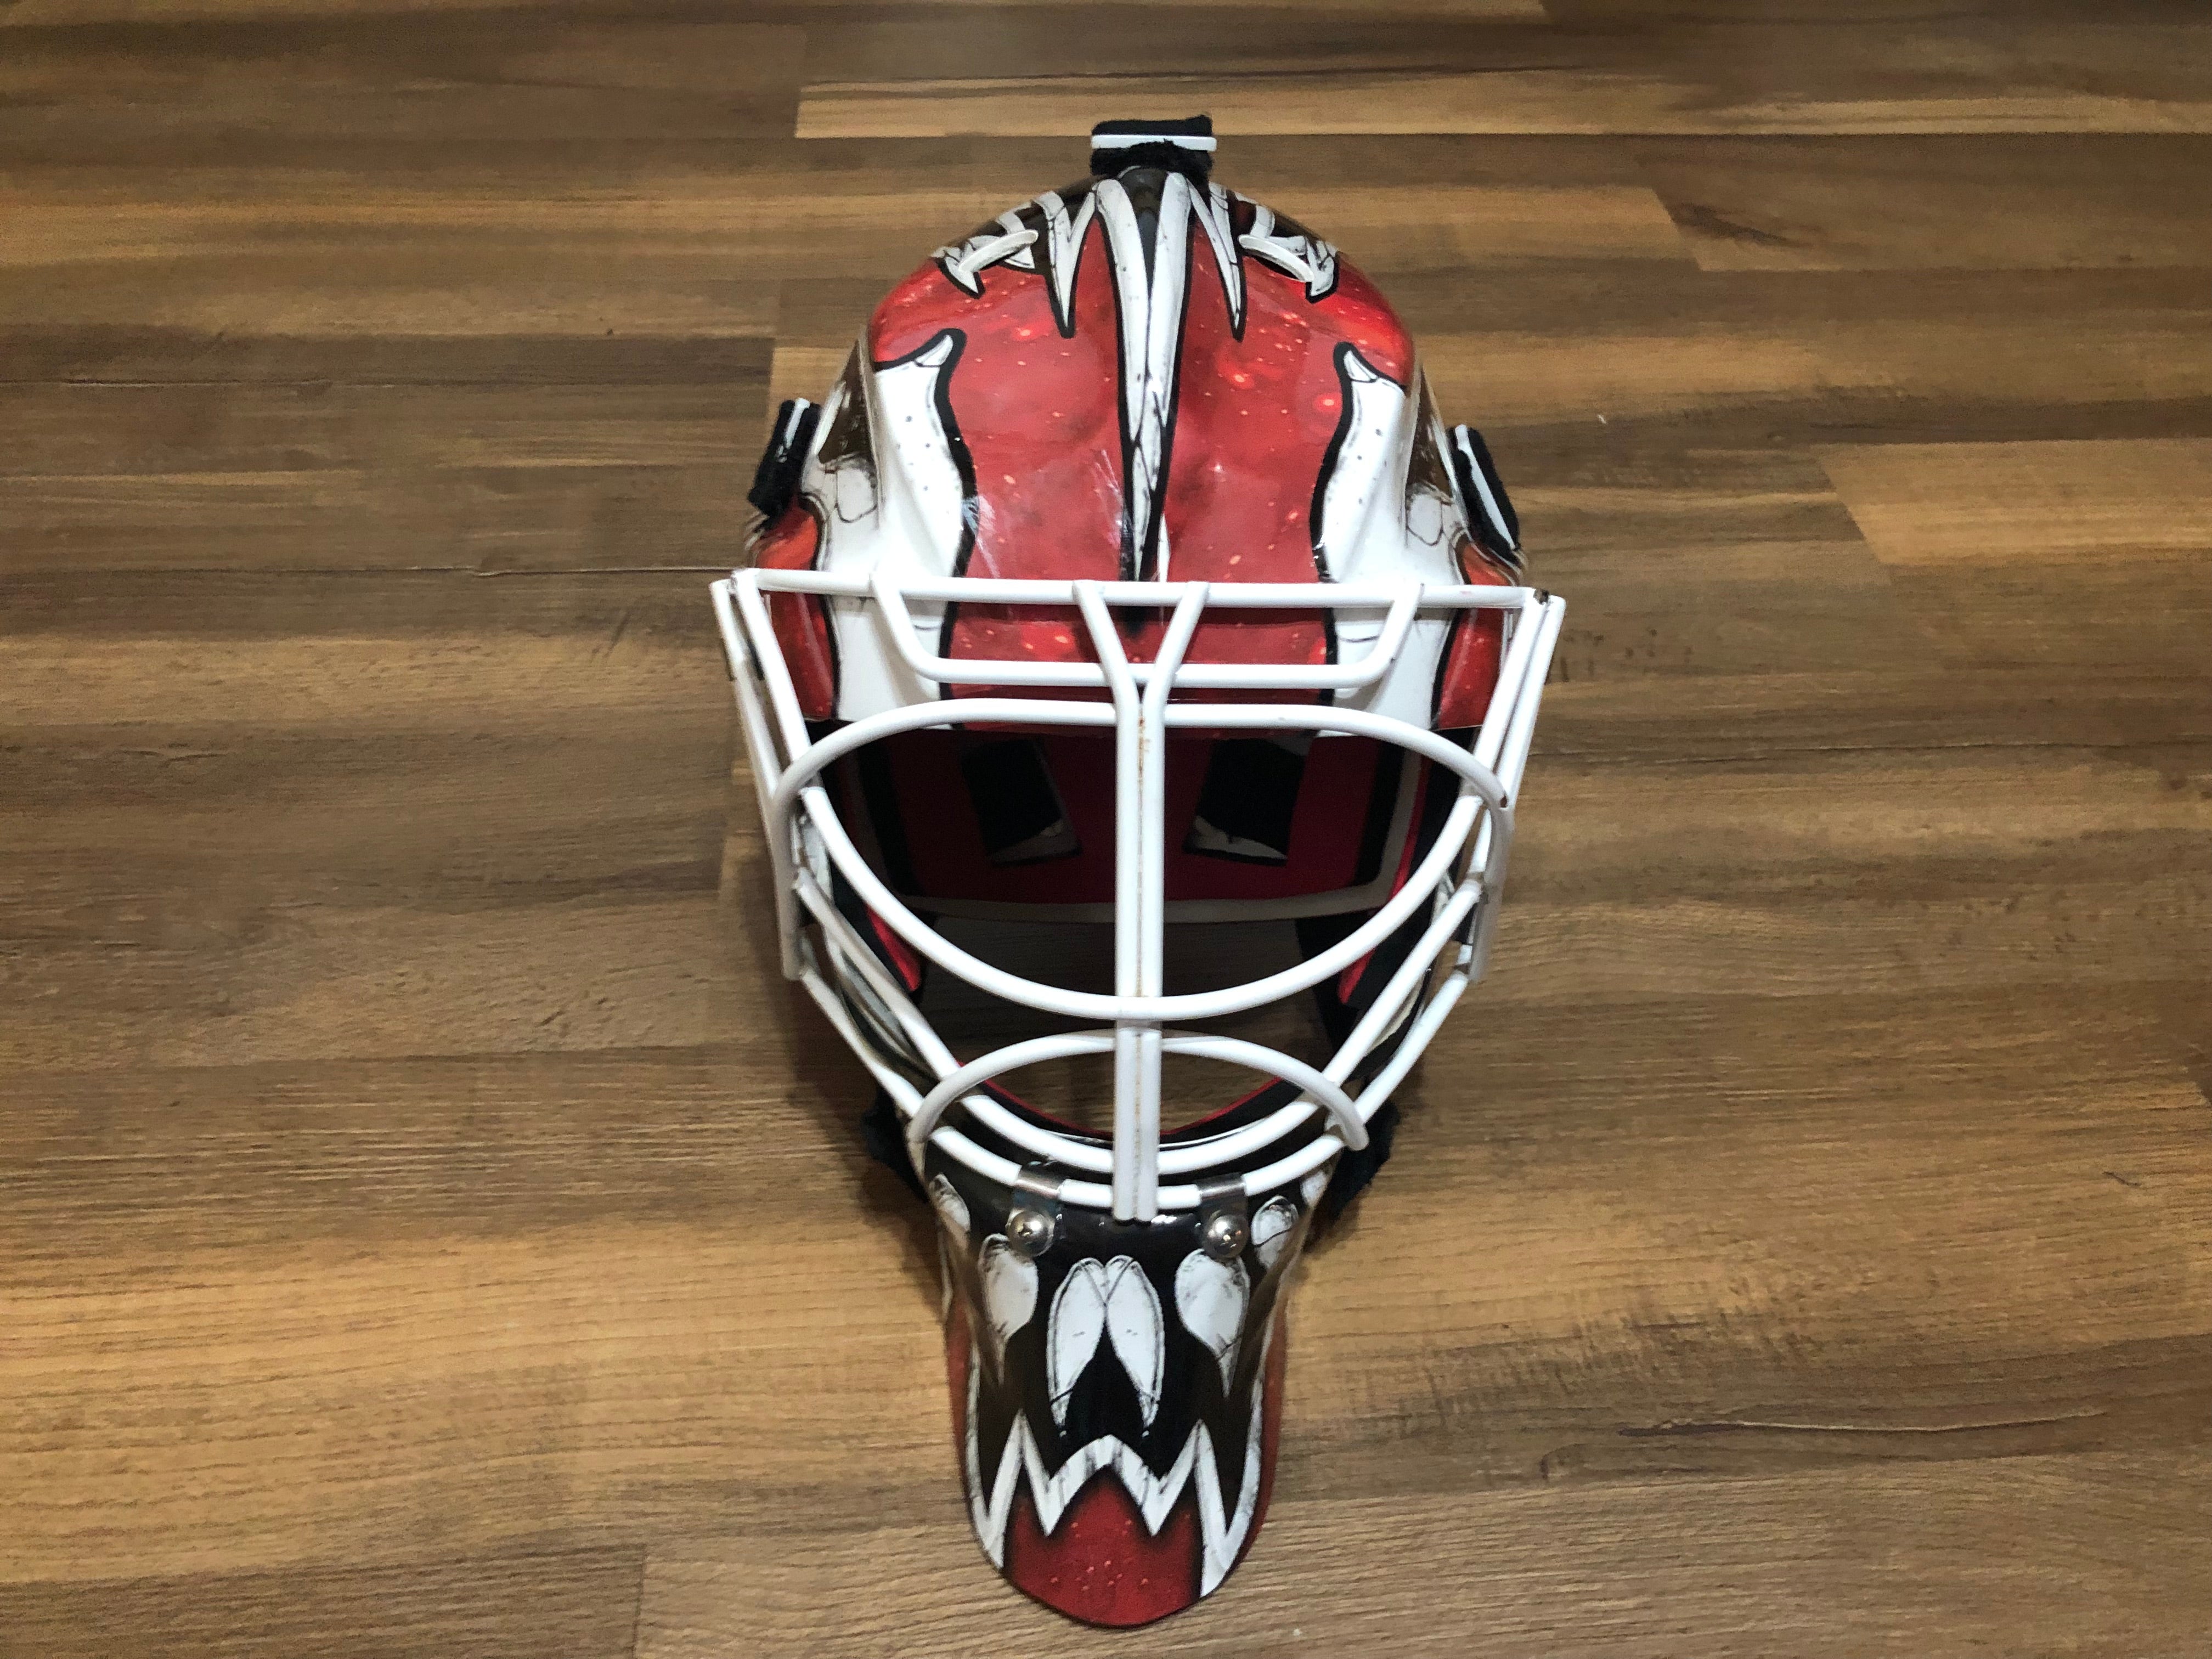 hockey goalie mask designs